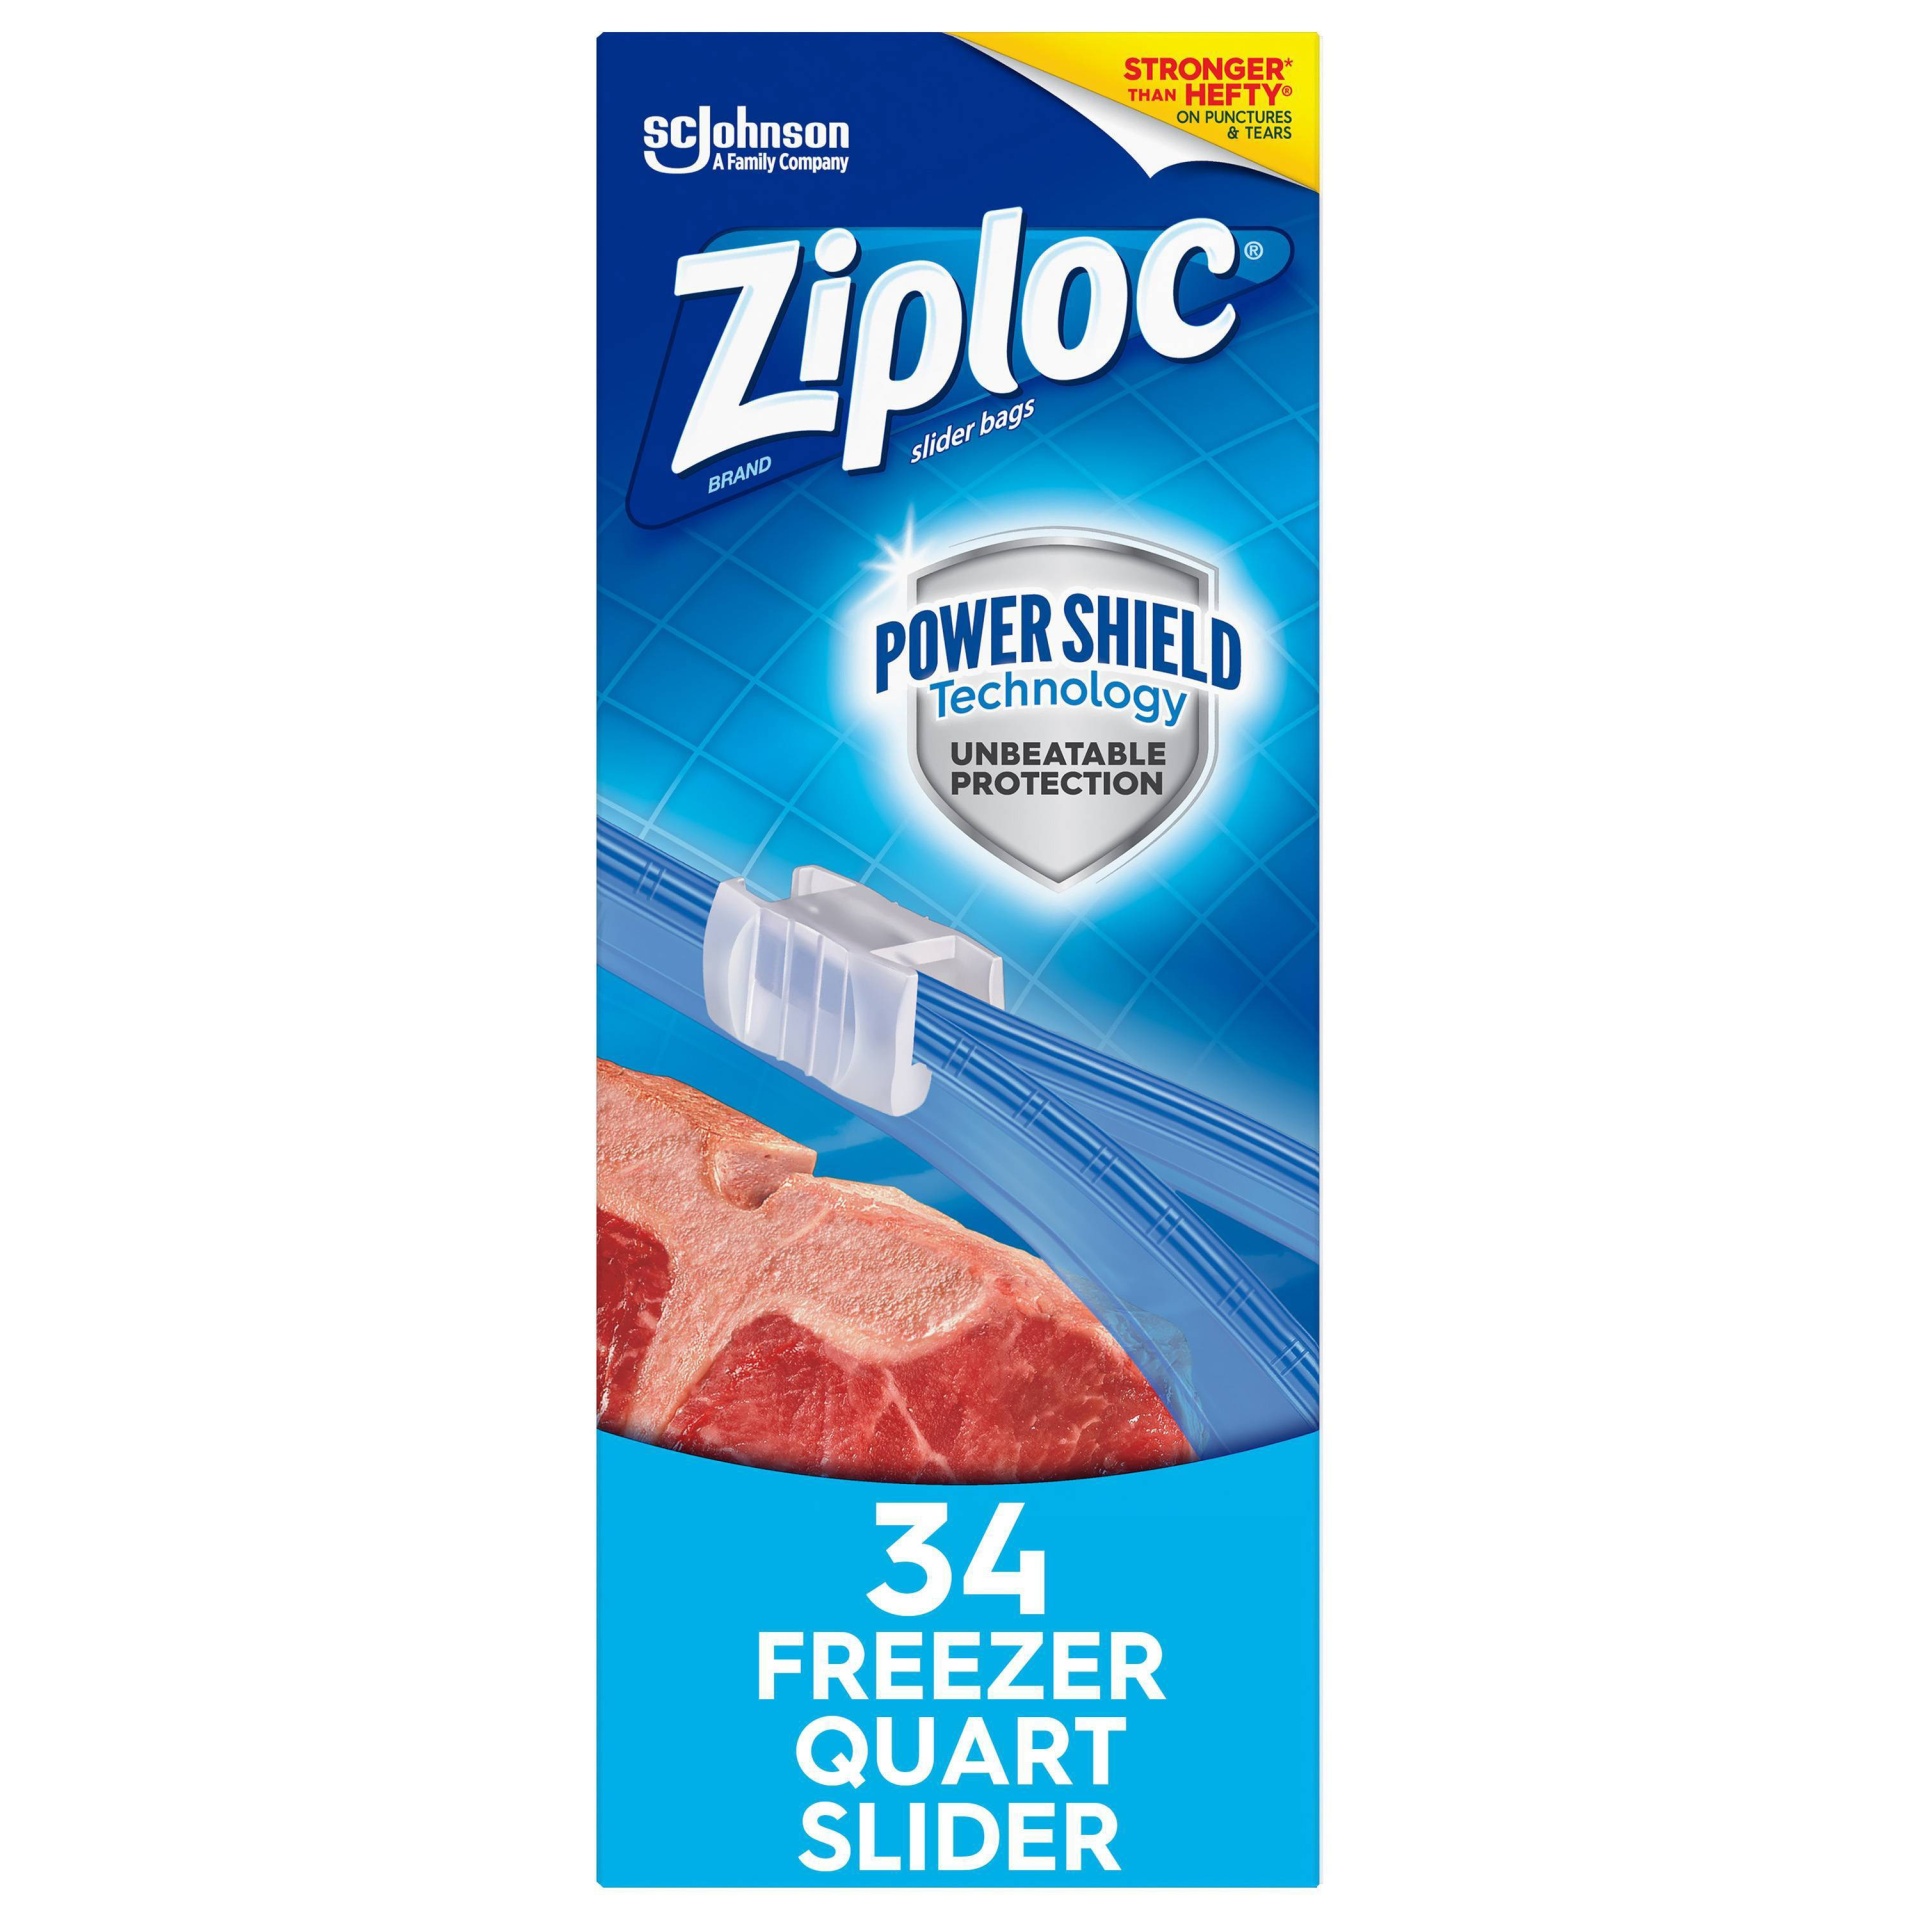 slide 1 of 10, Ziploc Slider Freezer Quart Bags with Power Shield Technology - 34ct, 34 ct